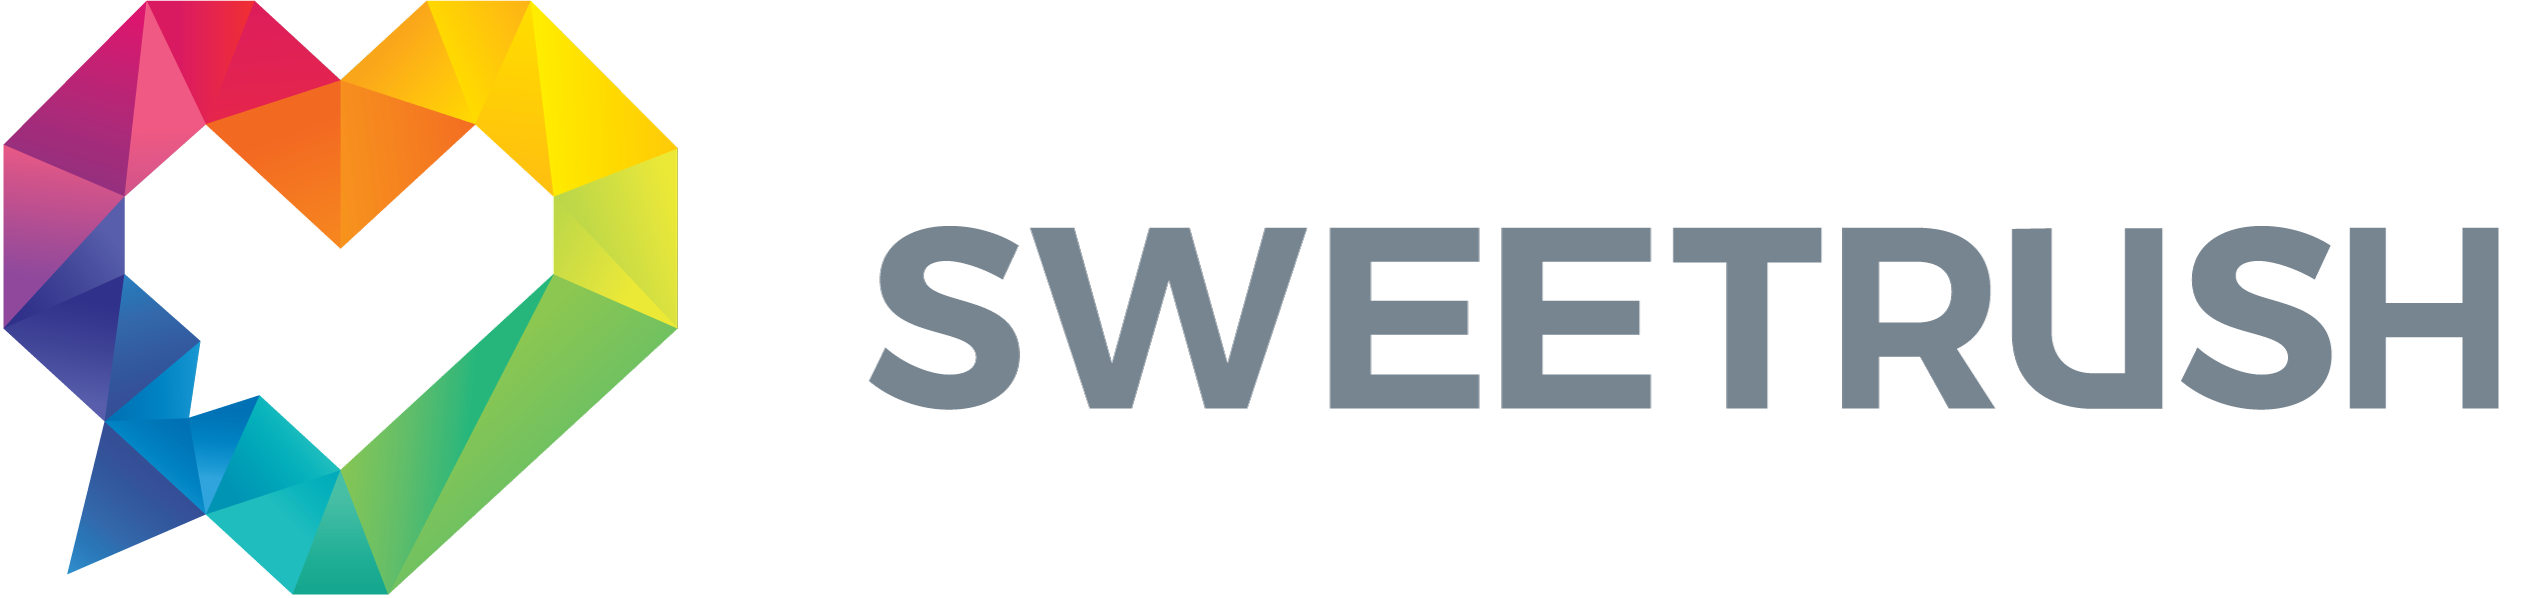 SweetRush_Logo_Horizontal_Gradients_FC-1_11-2019